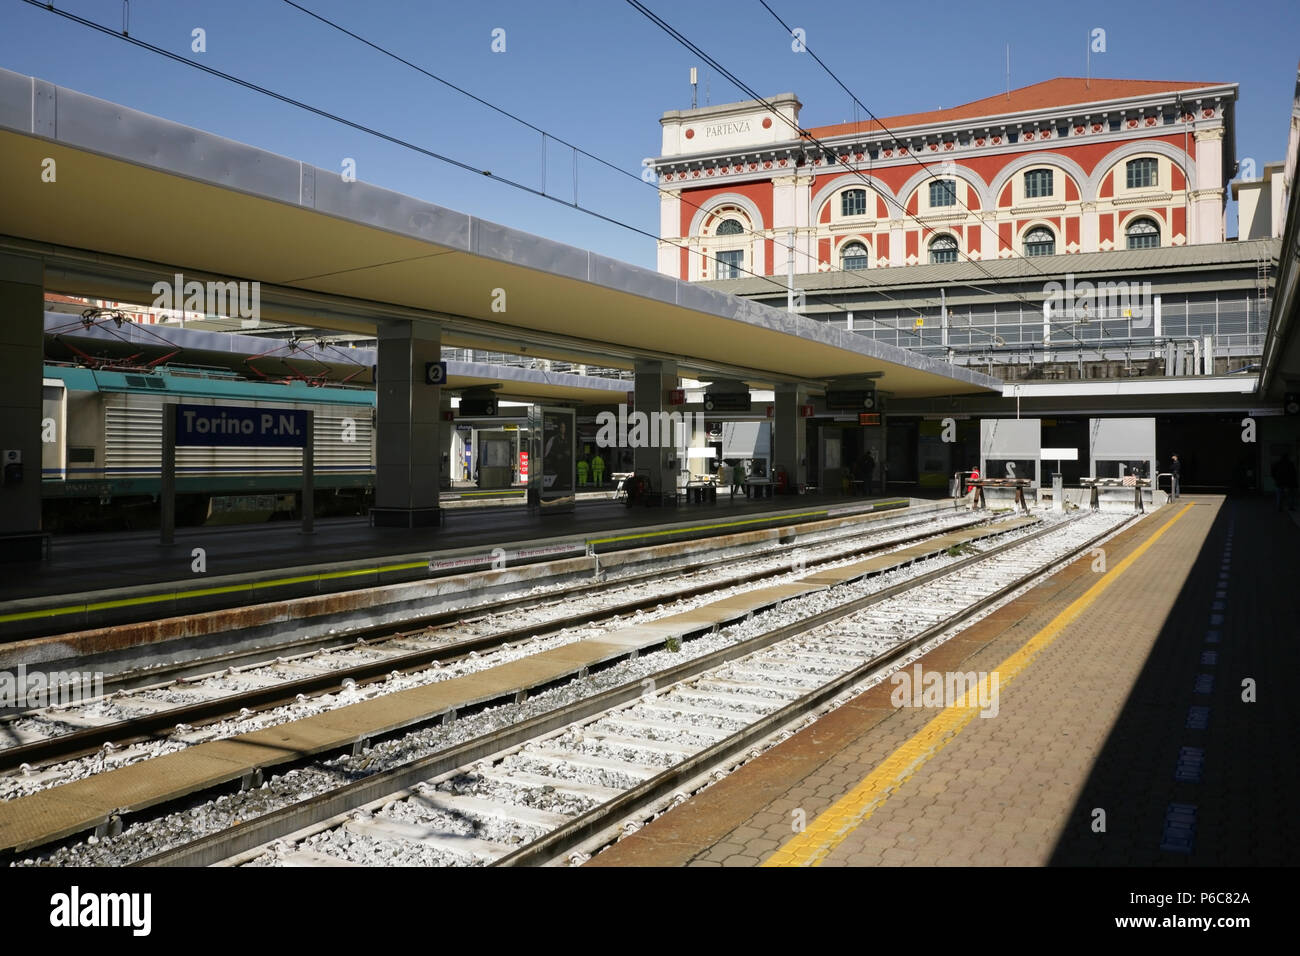 Turin Porta Nuova railway station Stock Photo - Alamy